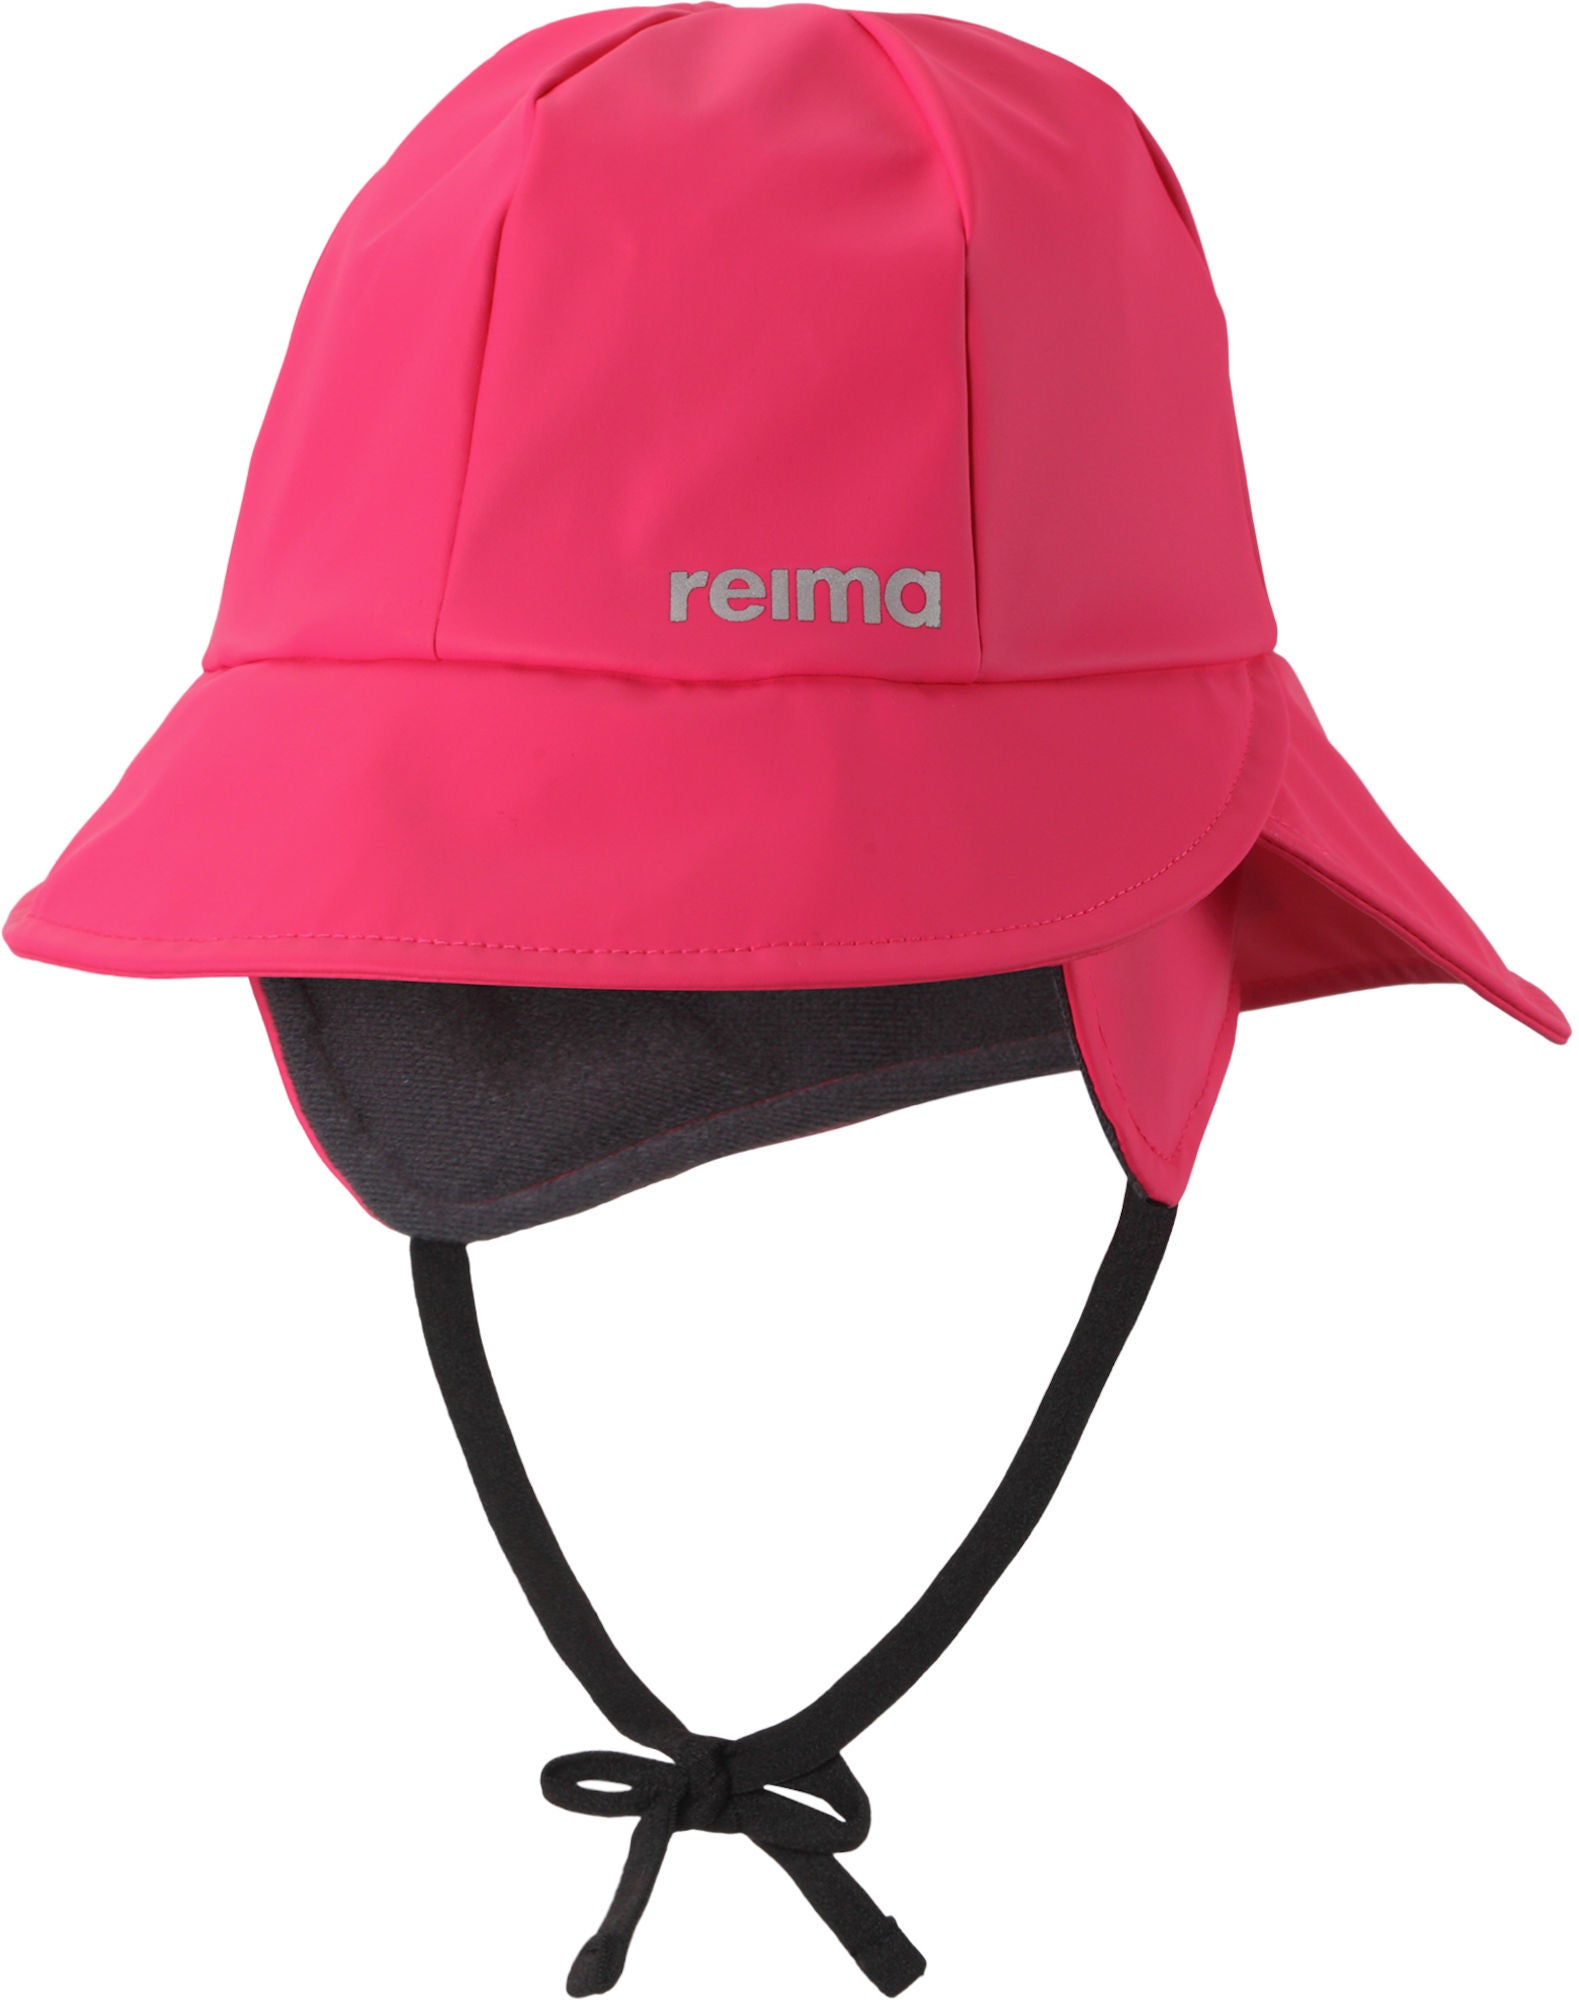 Reima Rainy Regenhut, Candy Pink 56